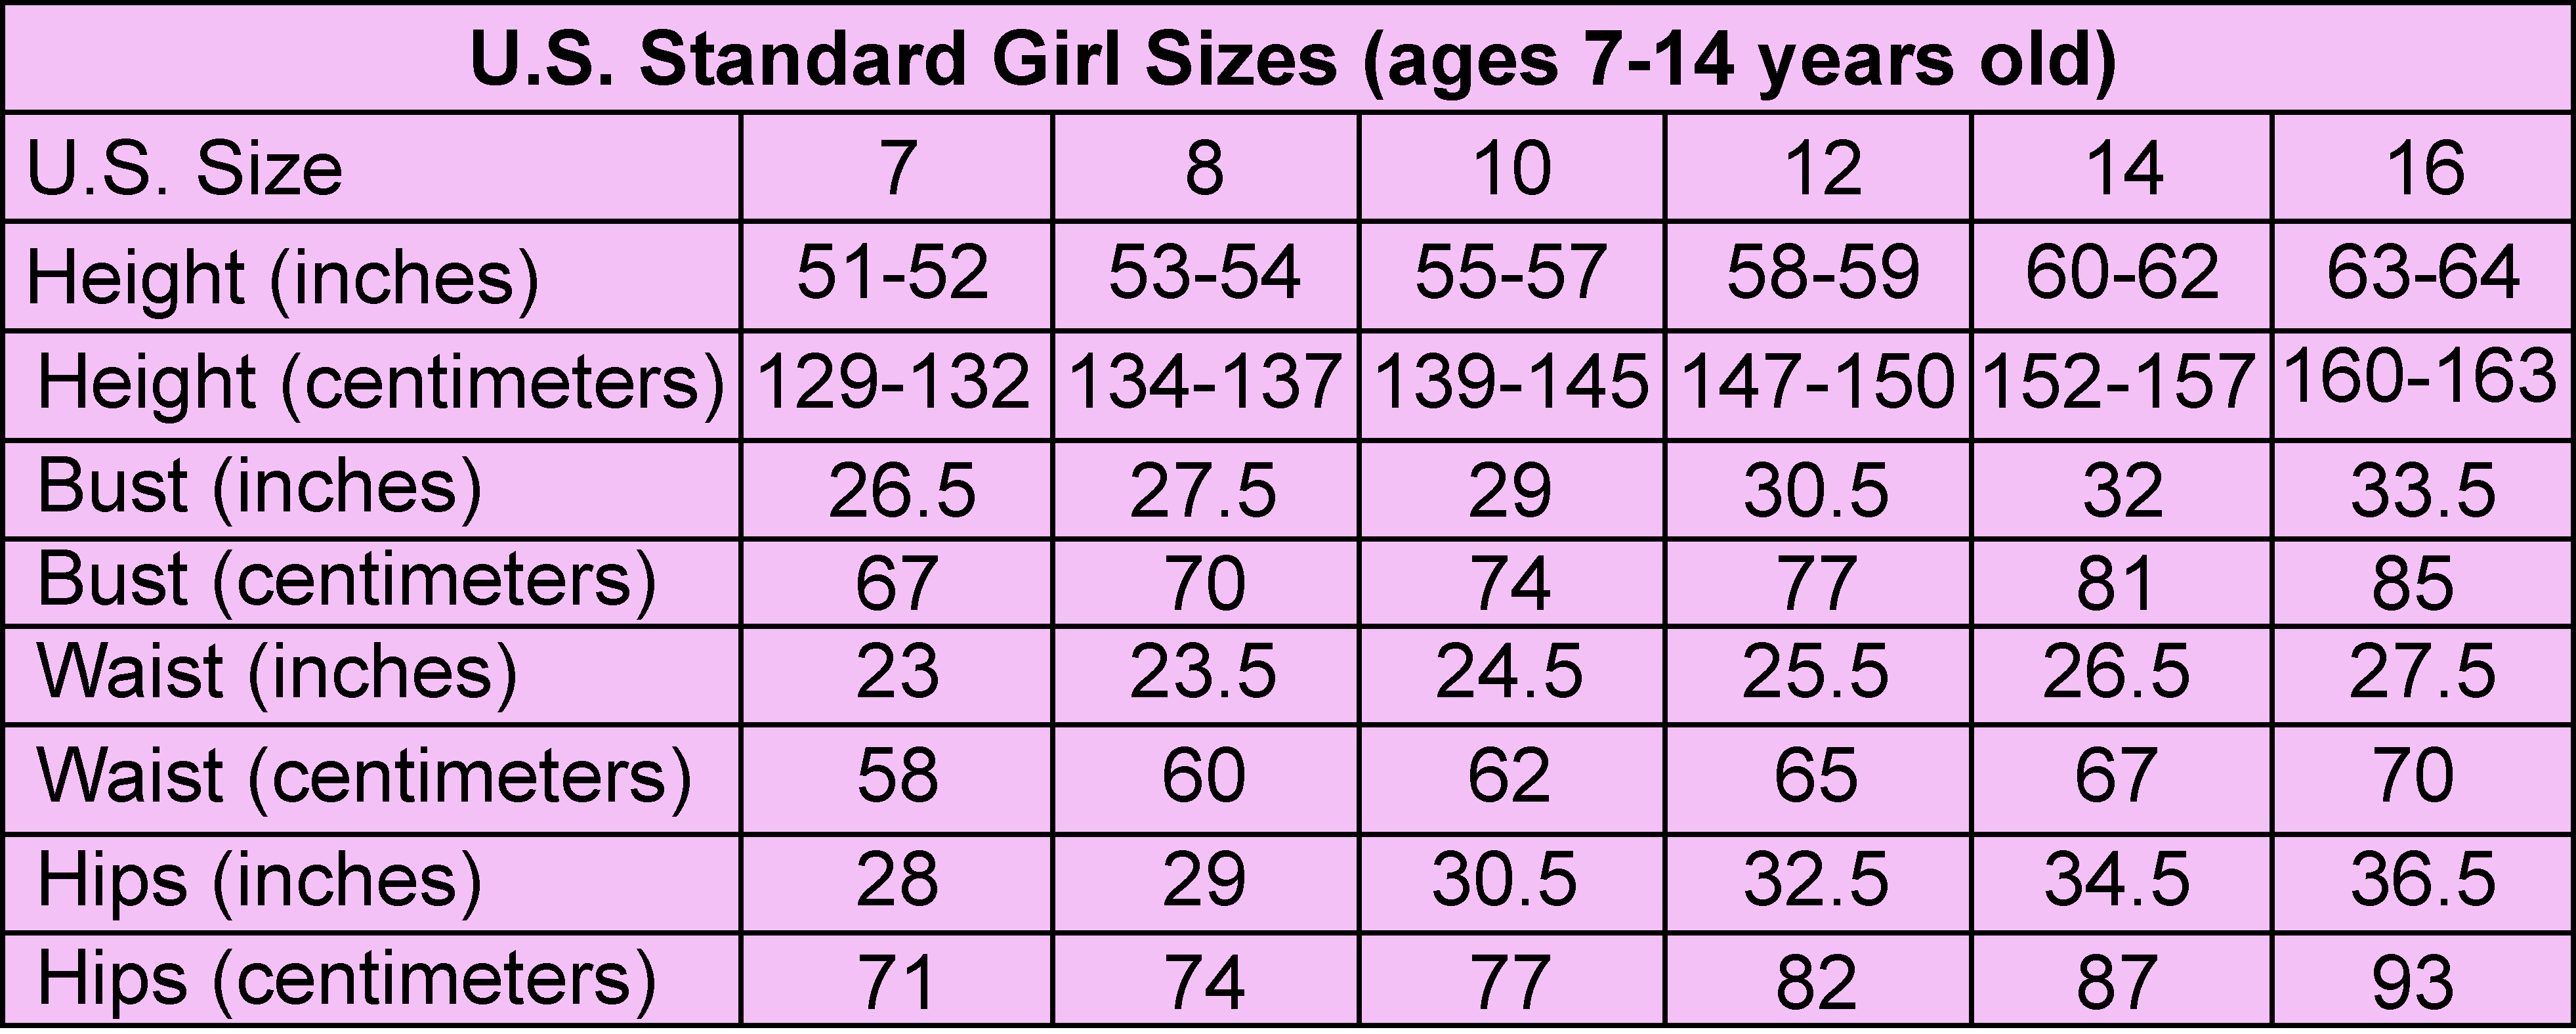 average shoe size for 12 year old boy us